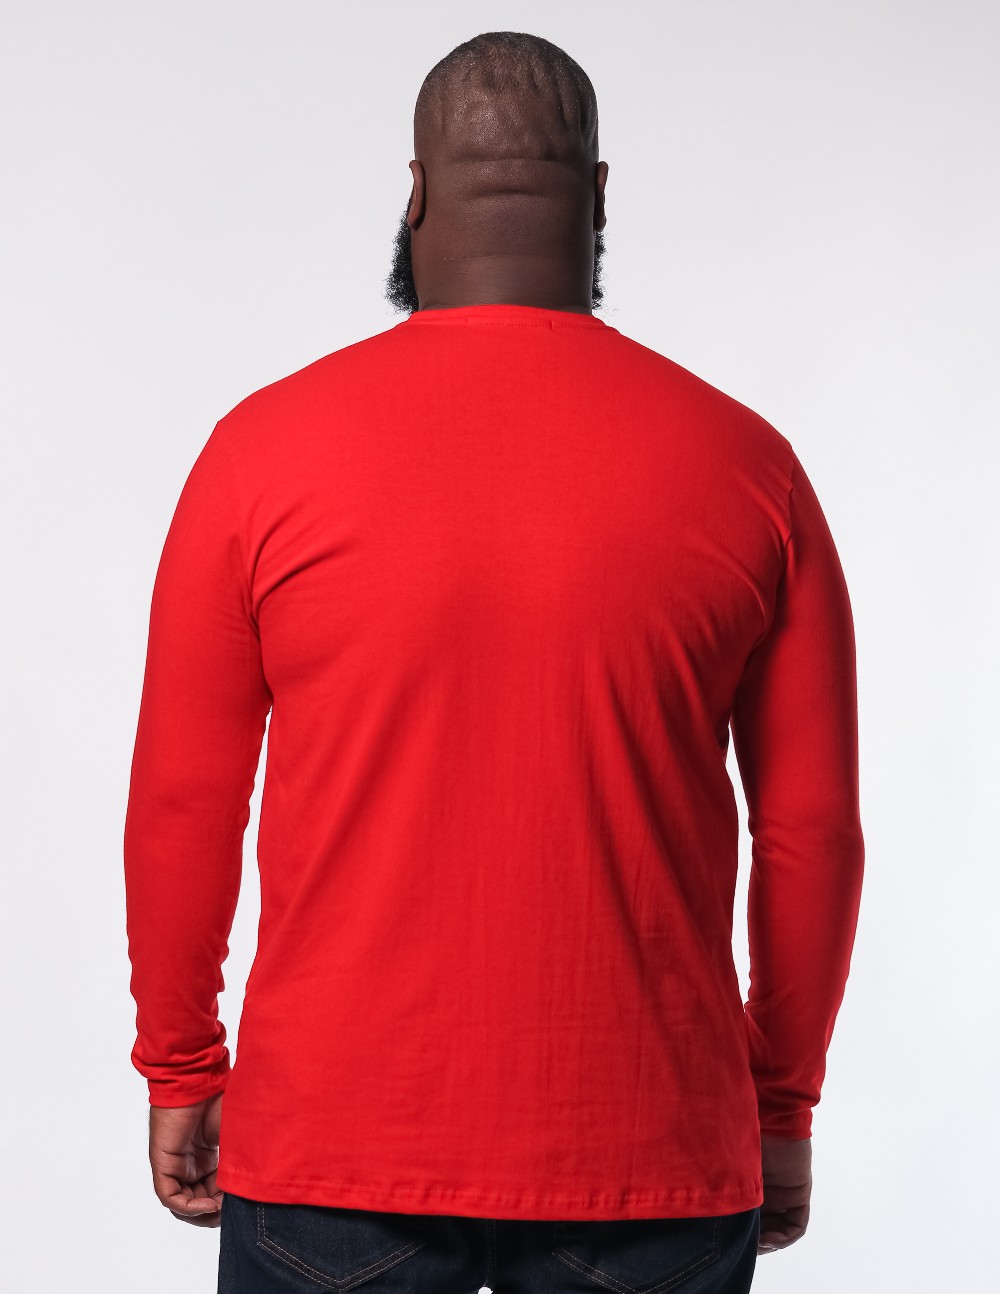 Camiseta Cotton plus size Manga Longa Vermelha